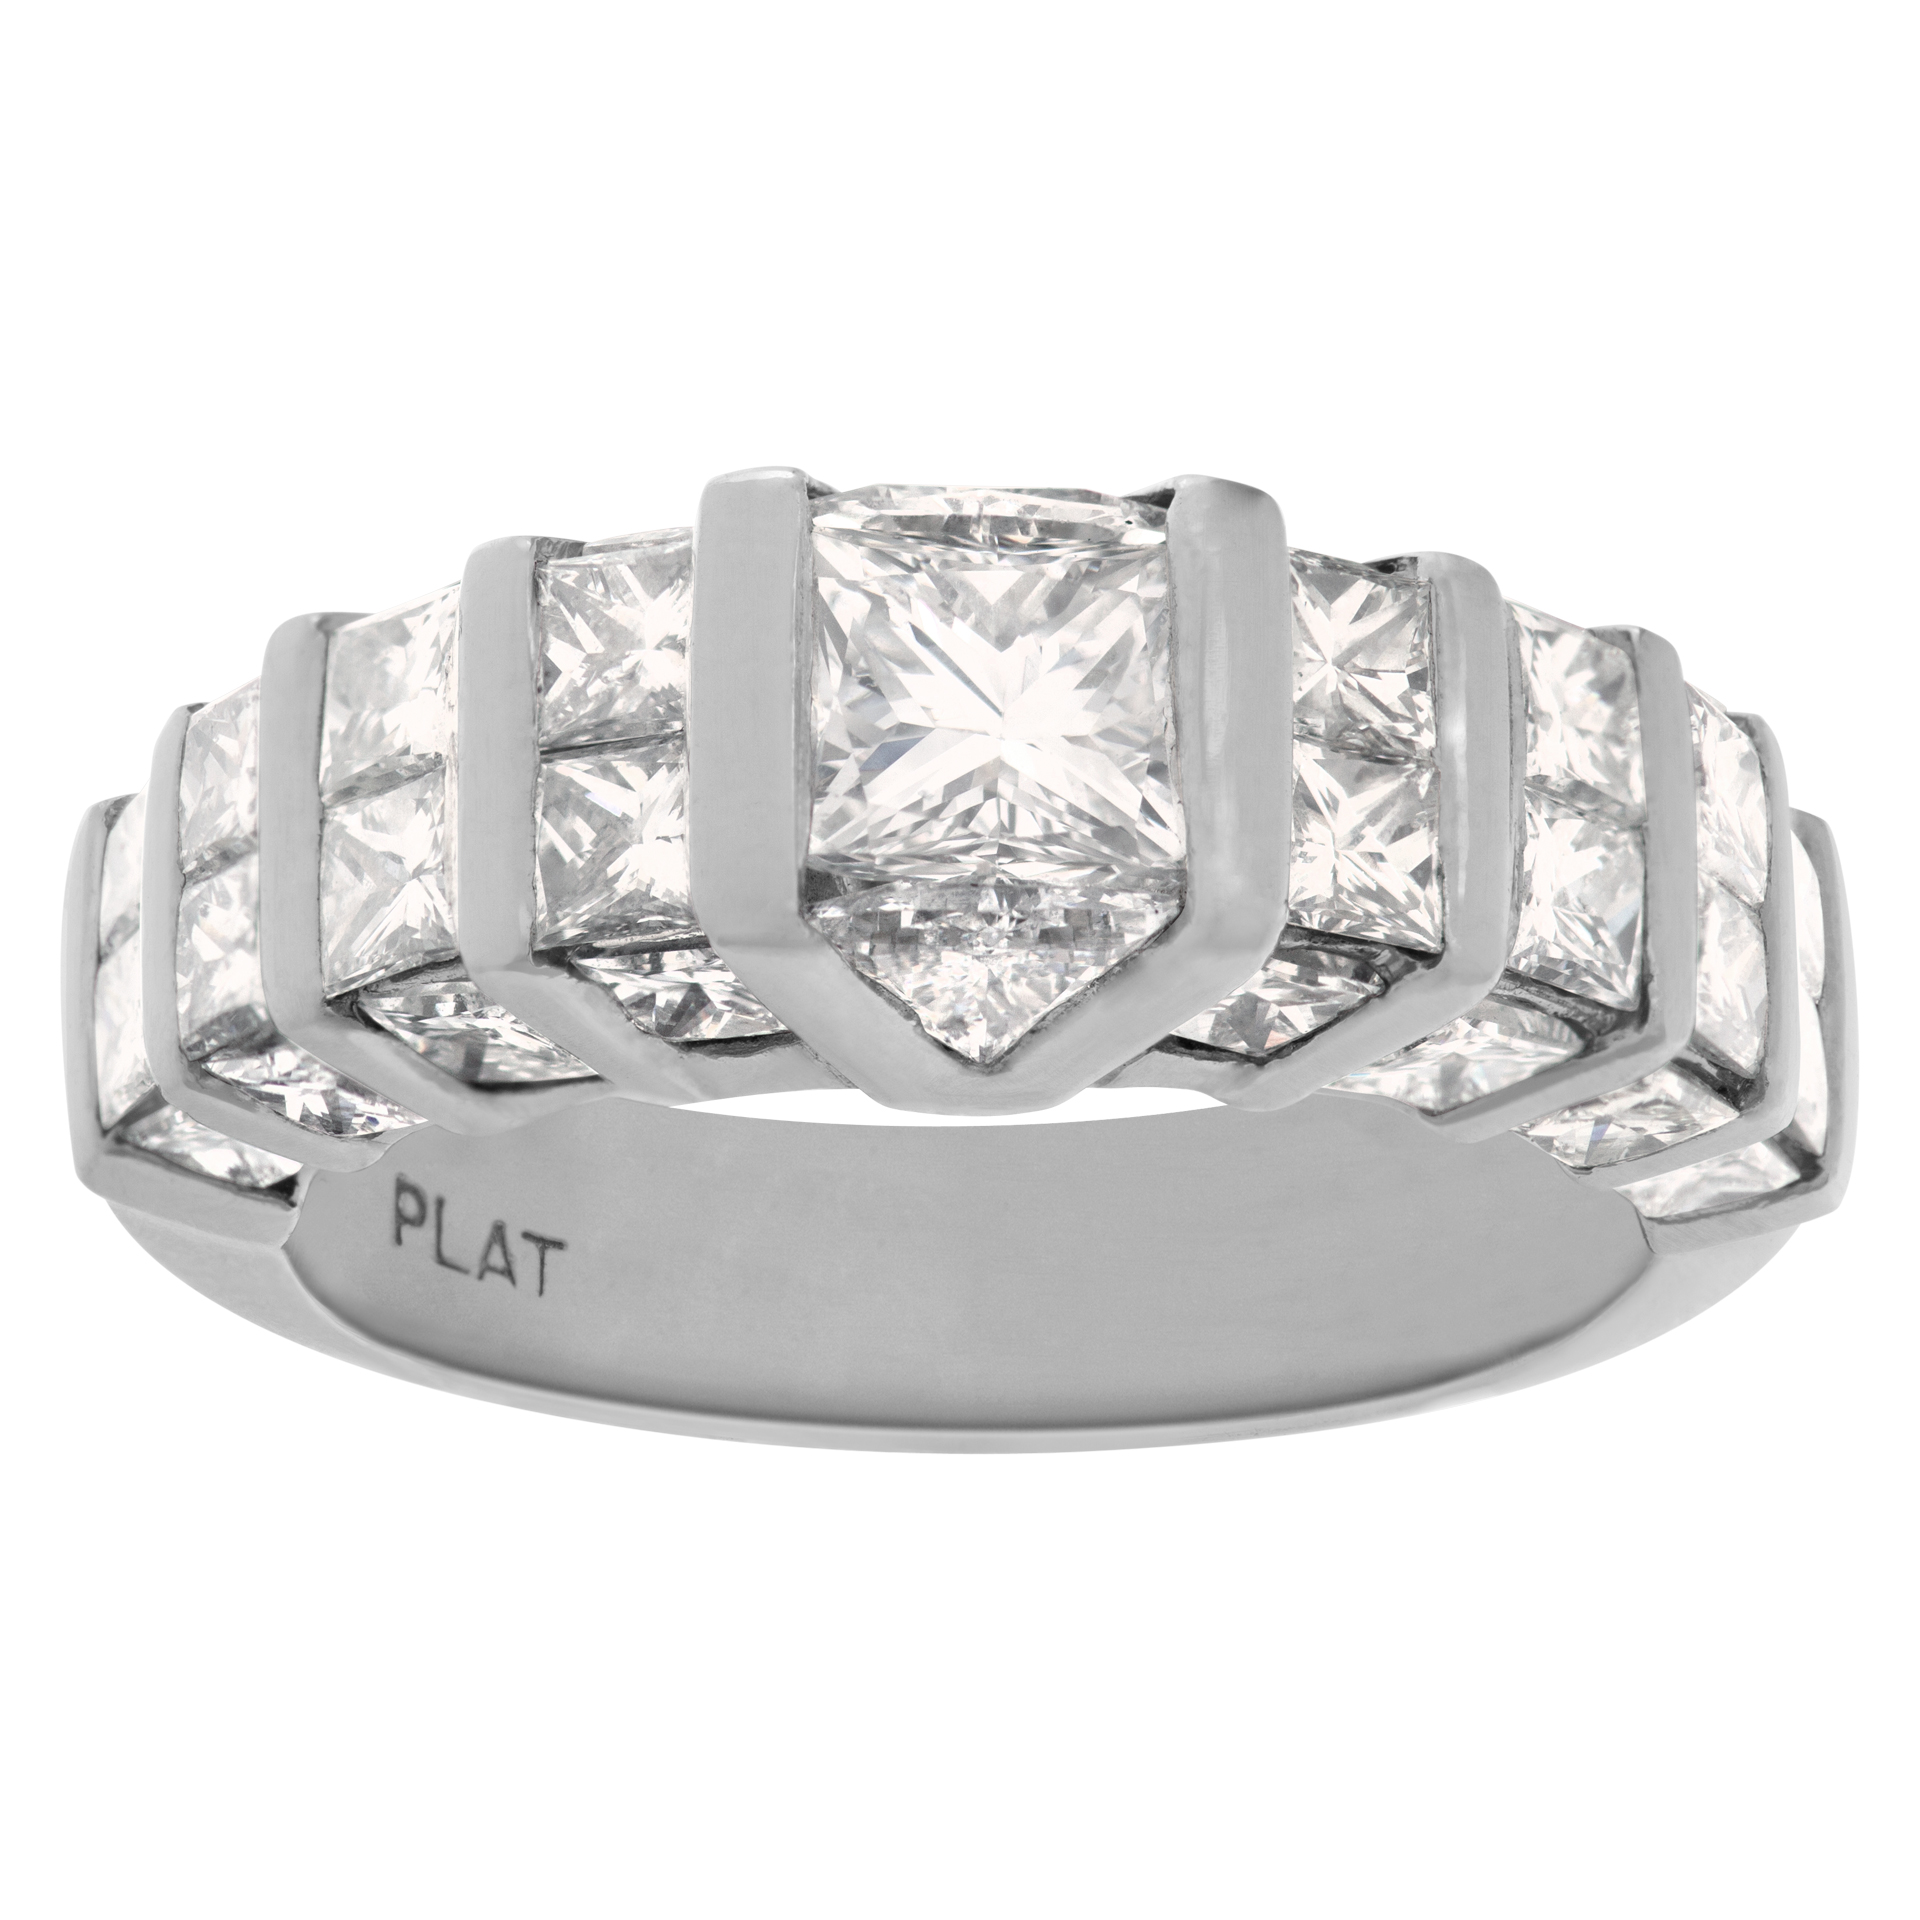 Platinum diamond band with channel set princess cut & trillion cut diamonds. 3.95cts